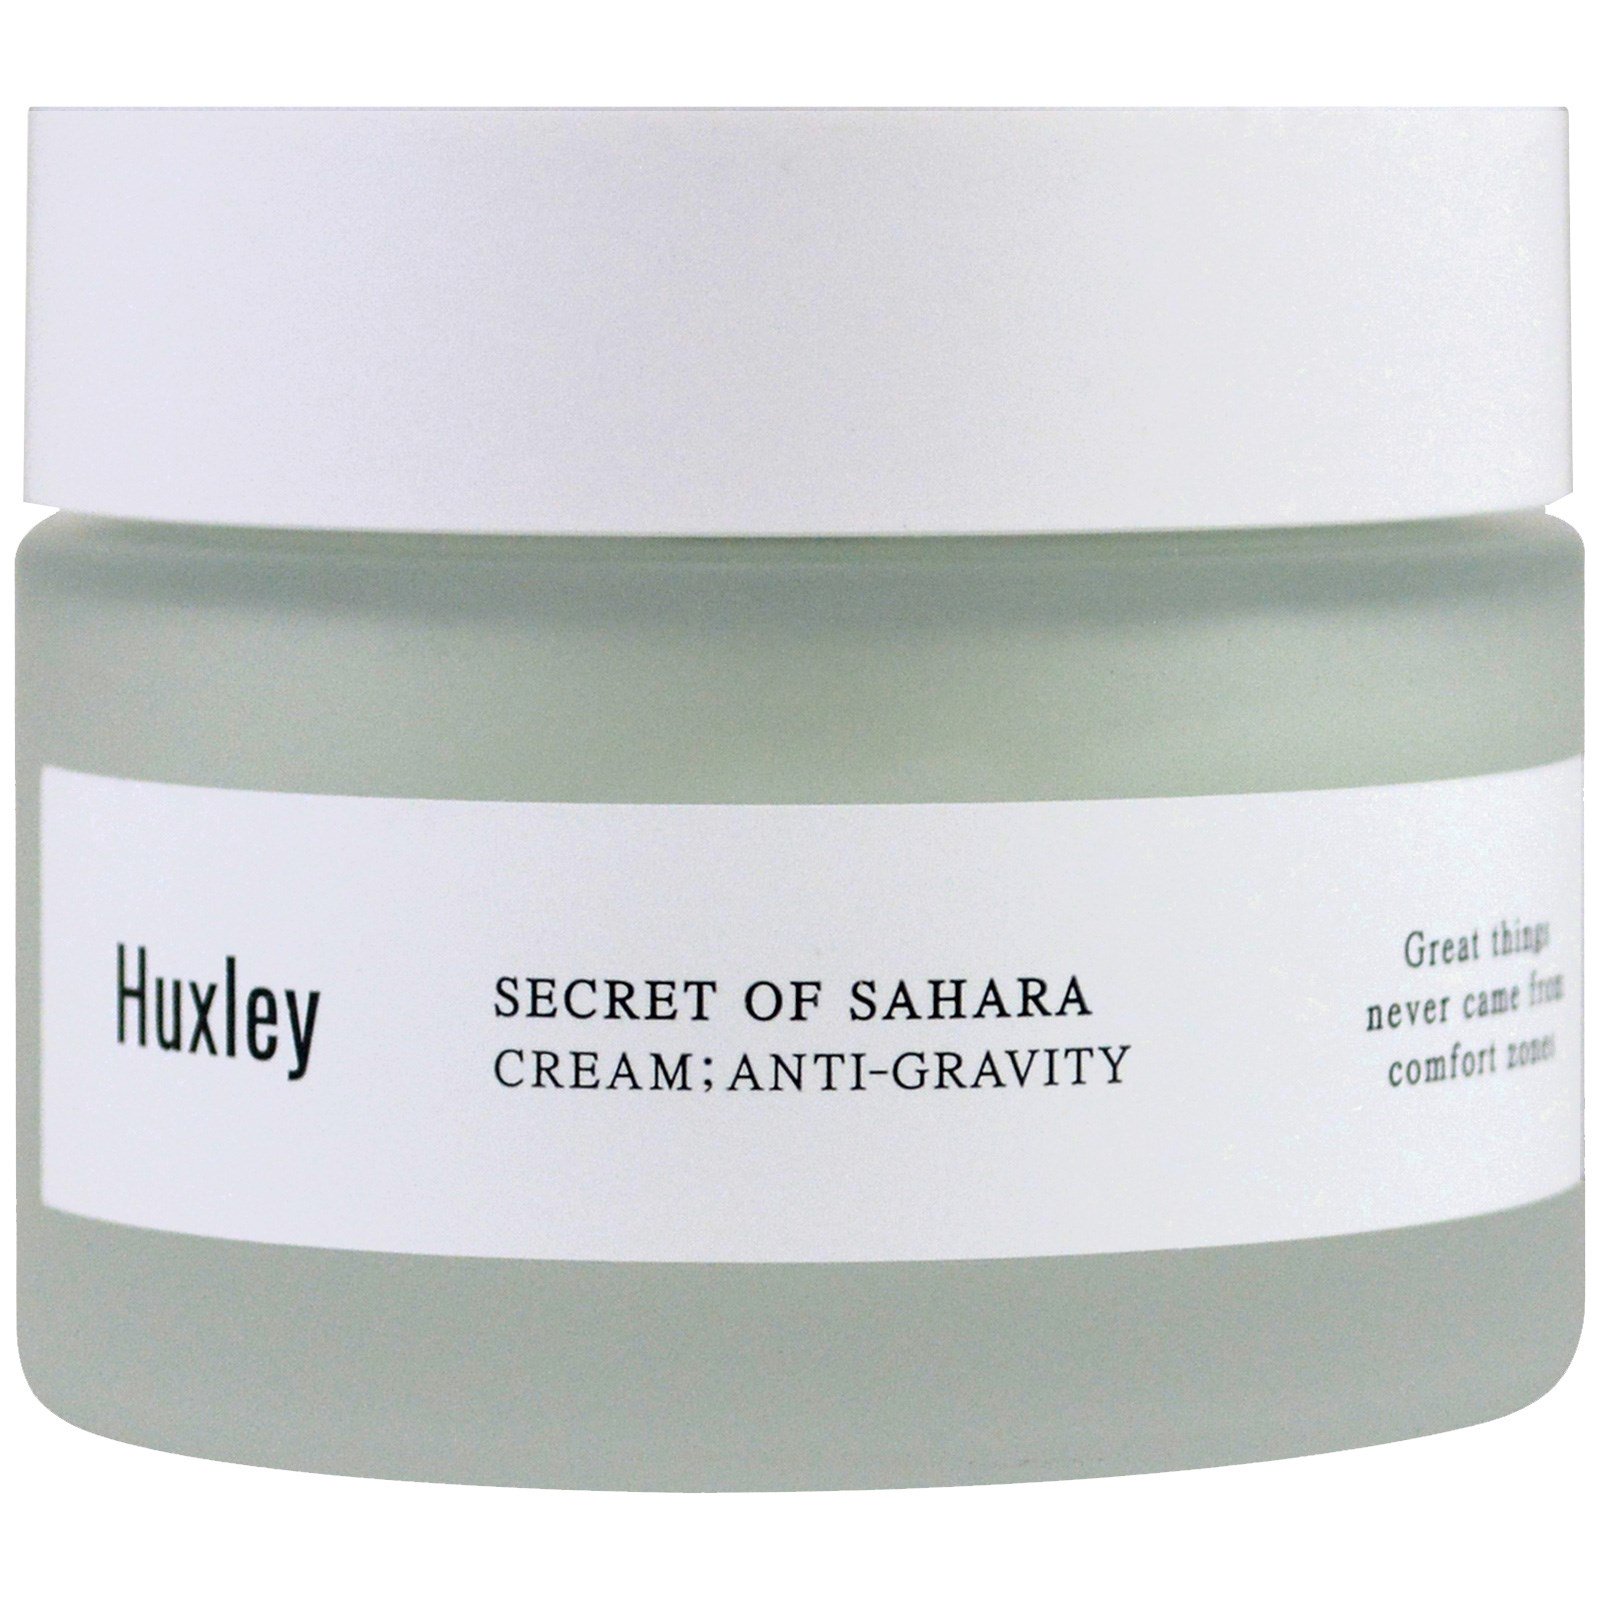 Huxley: Secret of Sahara Anti-Gravity Cream | My Skincare Adventure